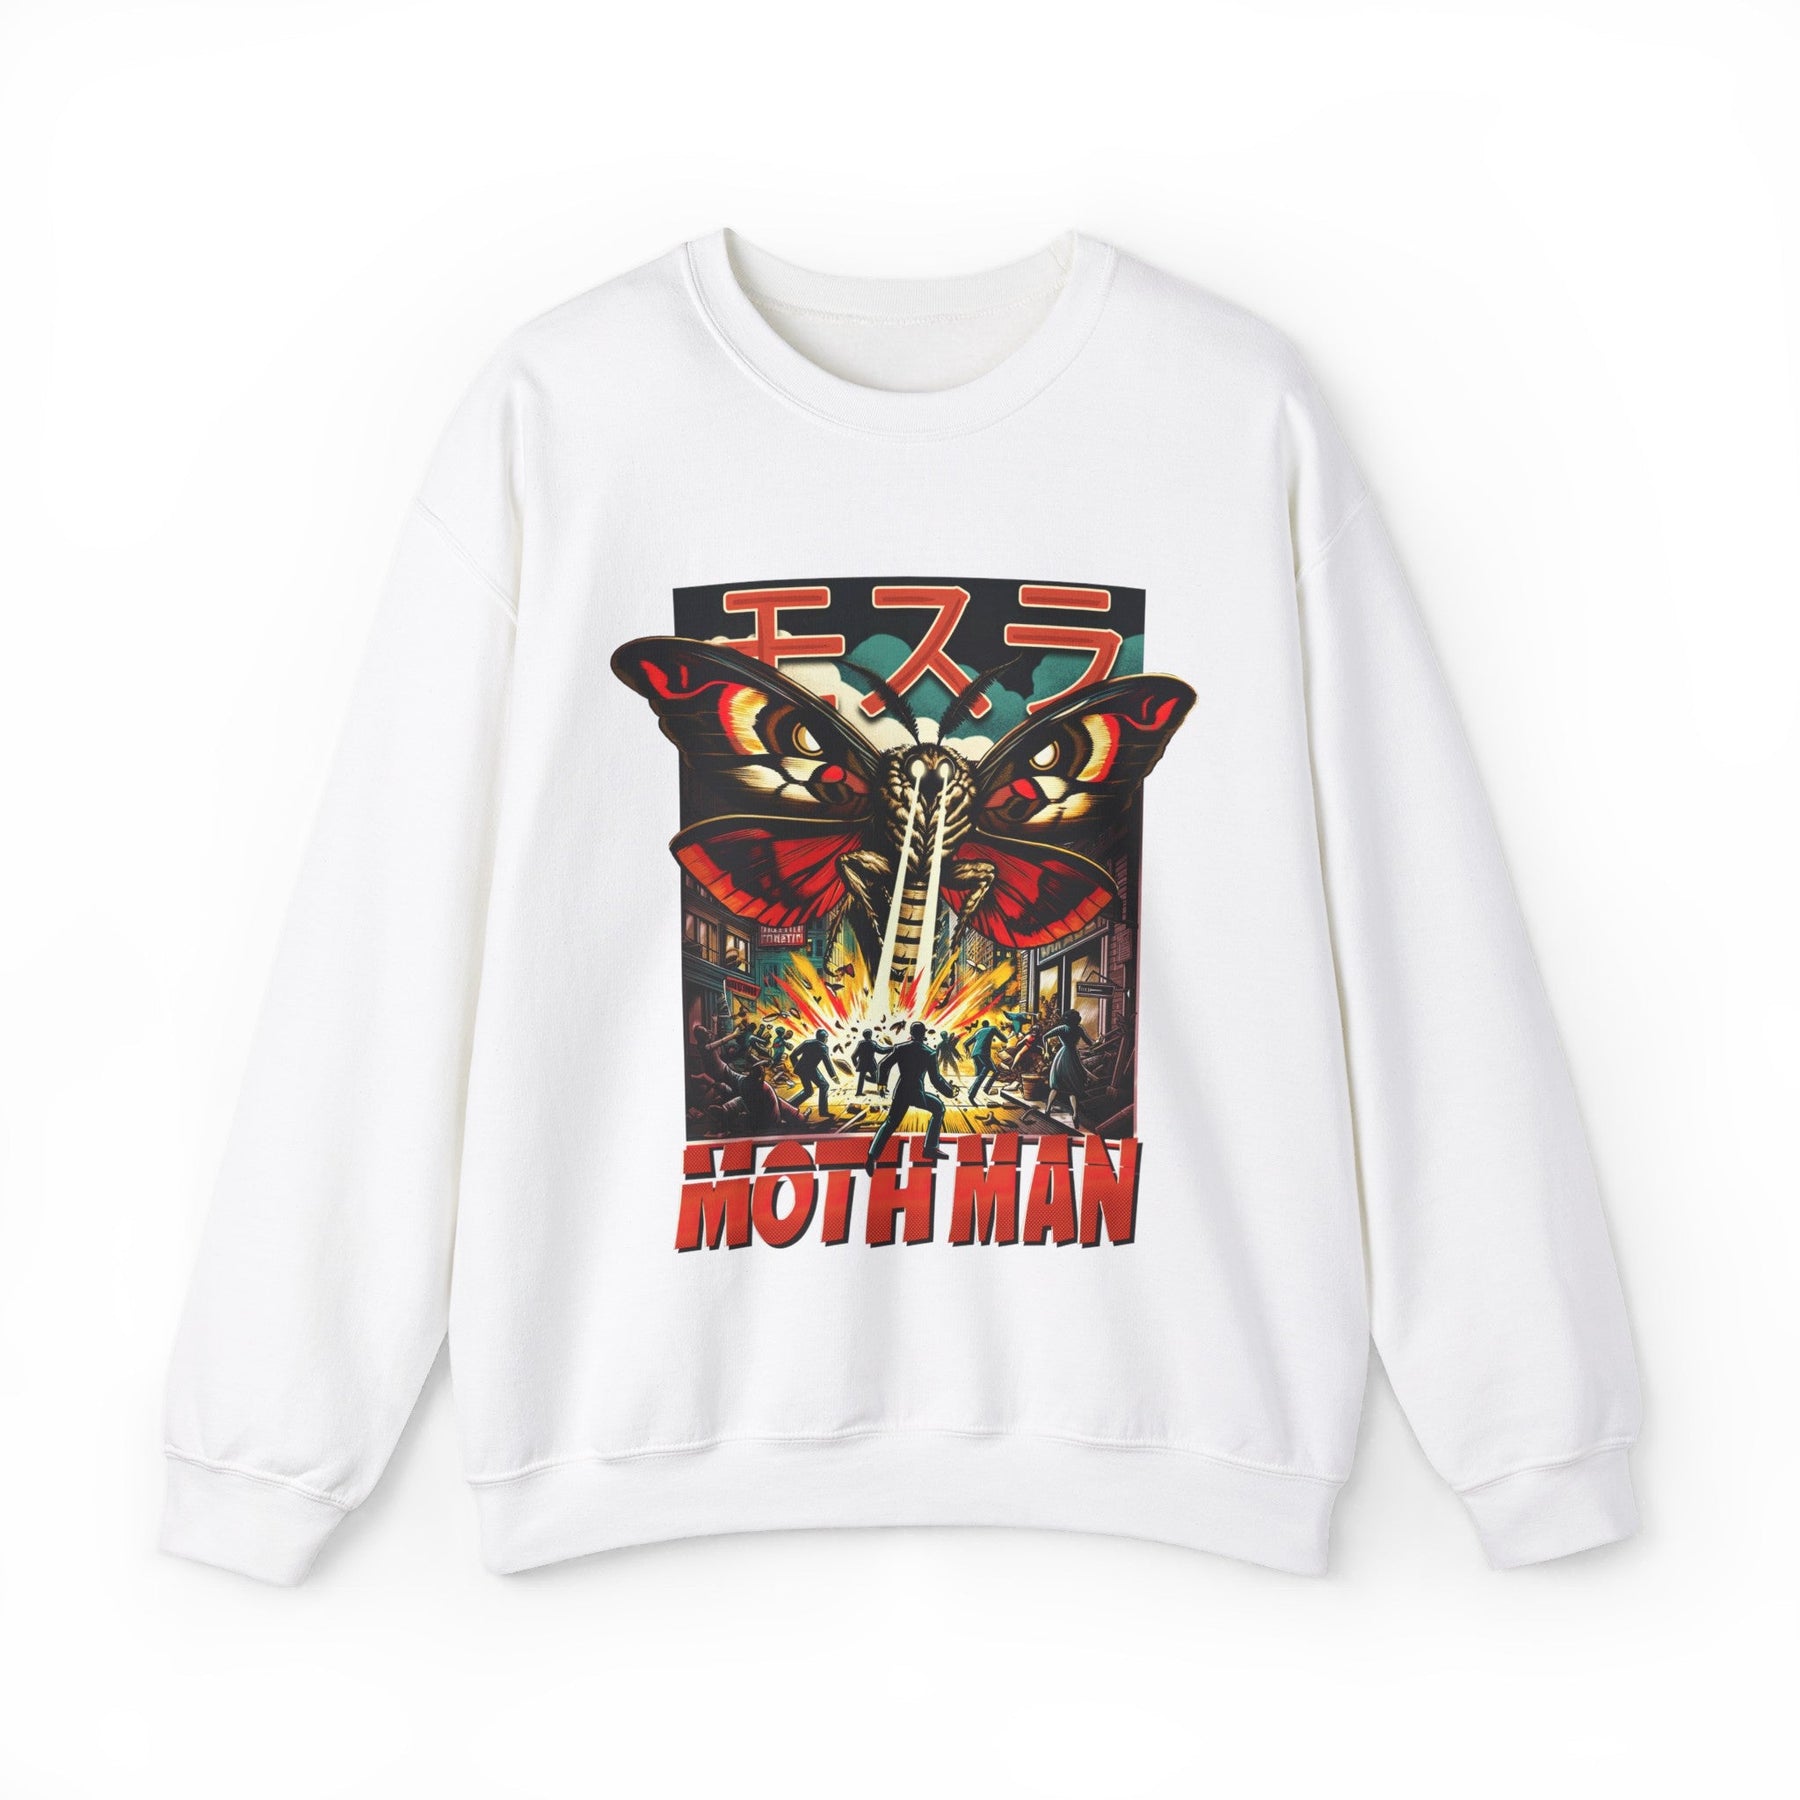 Mothman City Attack Crewneck Sweatshirt - Goth Cloth Co.Sweatshirt14745917461502625038